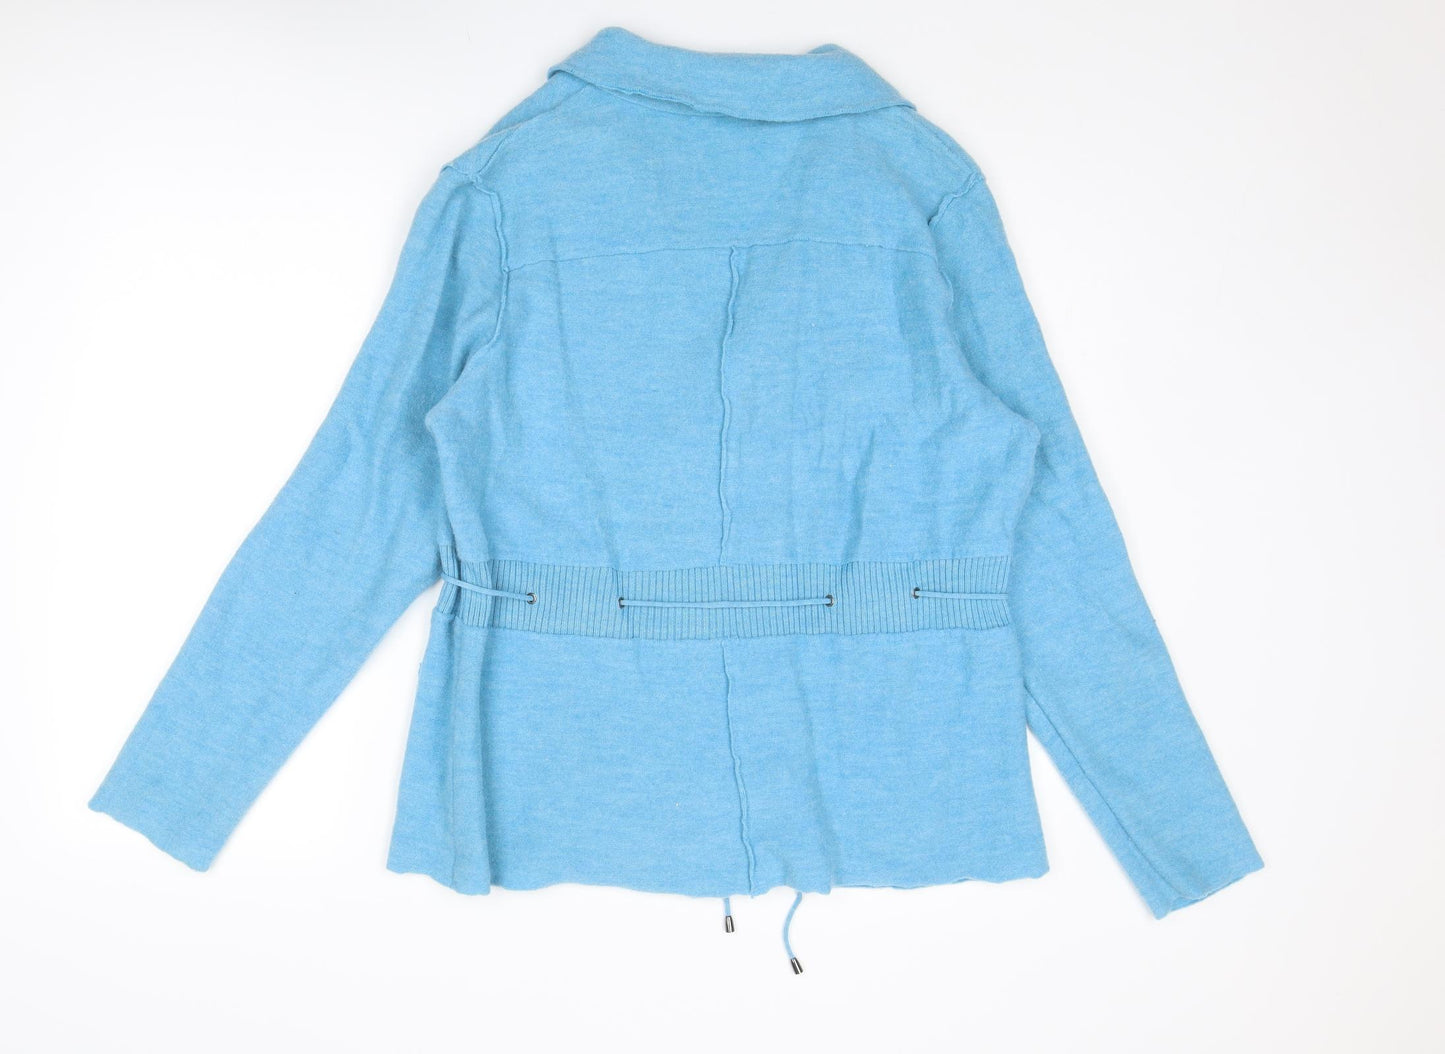 FRANK WALDER Womens Blue Collared Wool Cardigan Jumper Size 18